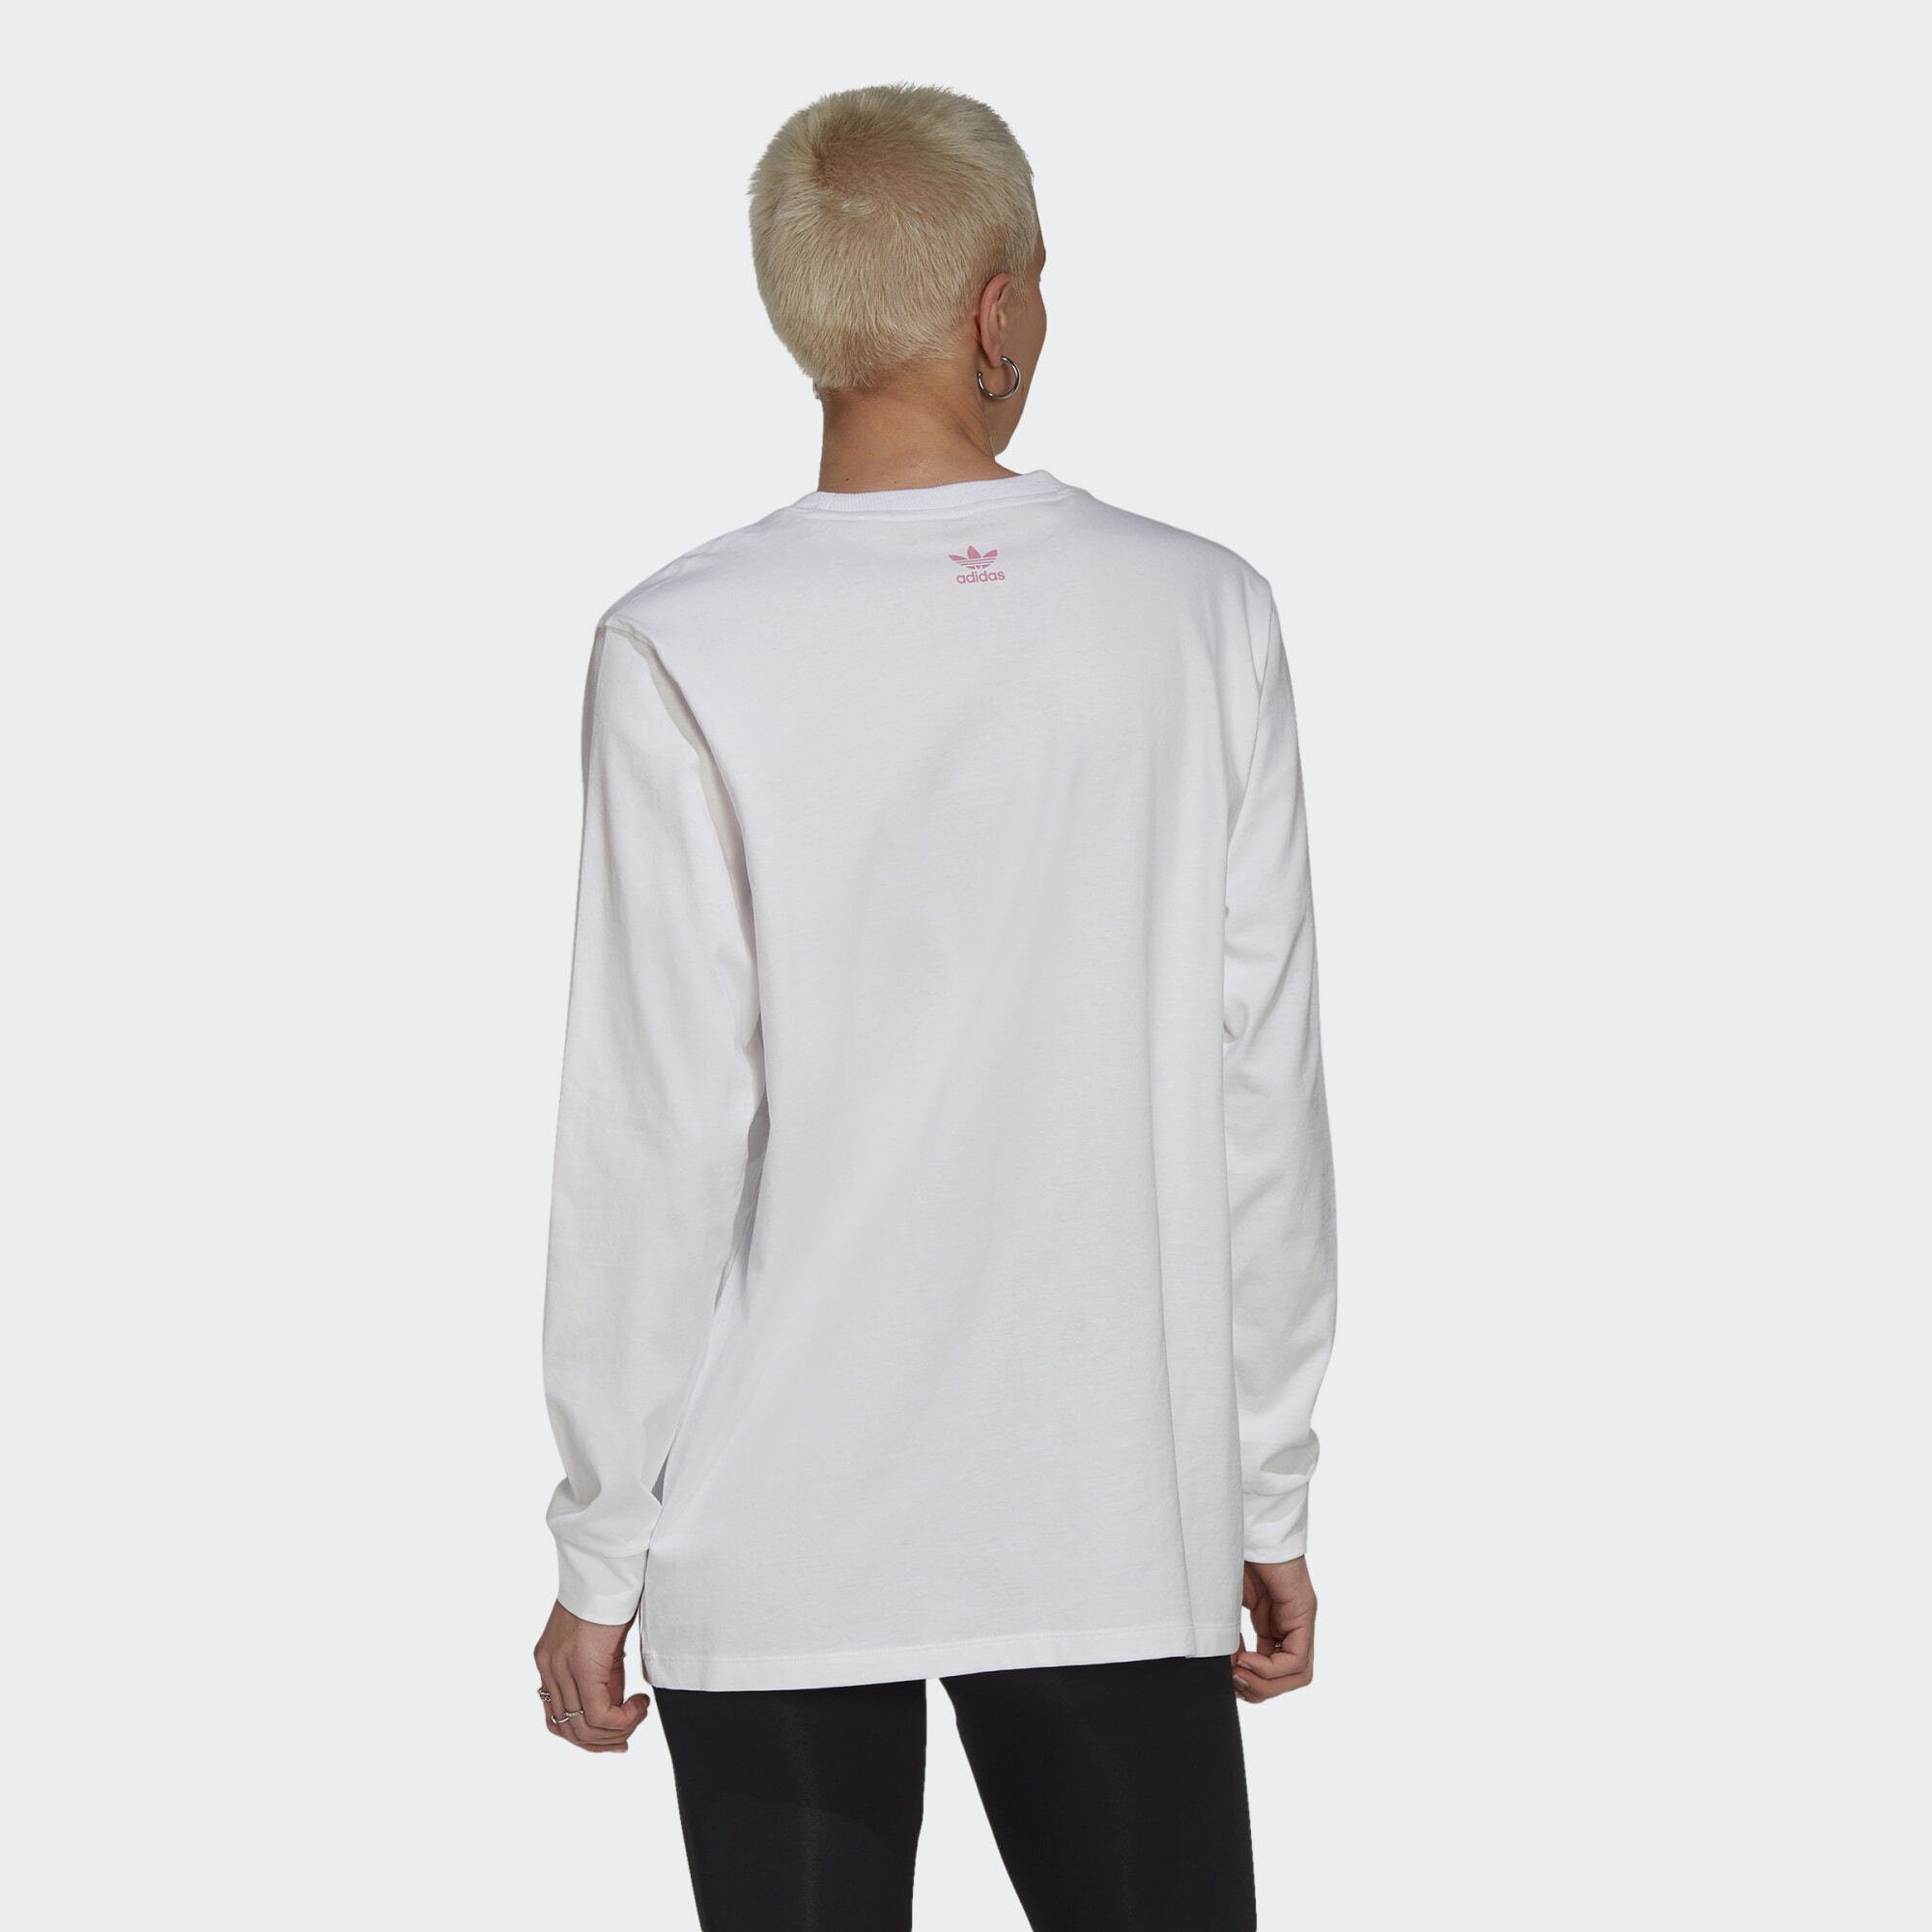 ALWAYS adidas GRAPHIC LONGSLEEVE T-Shirt White Originals ORIGINAL